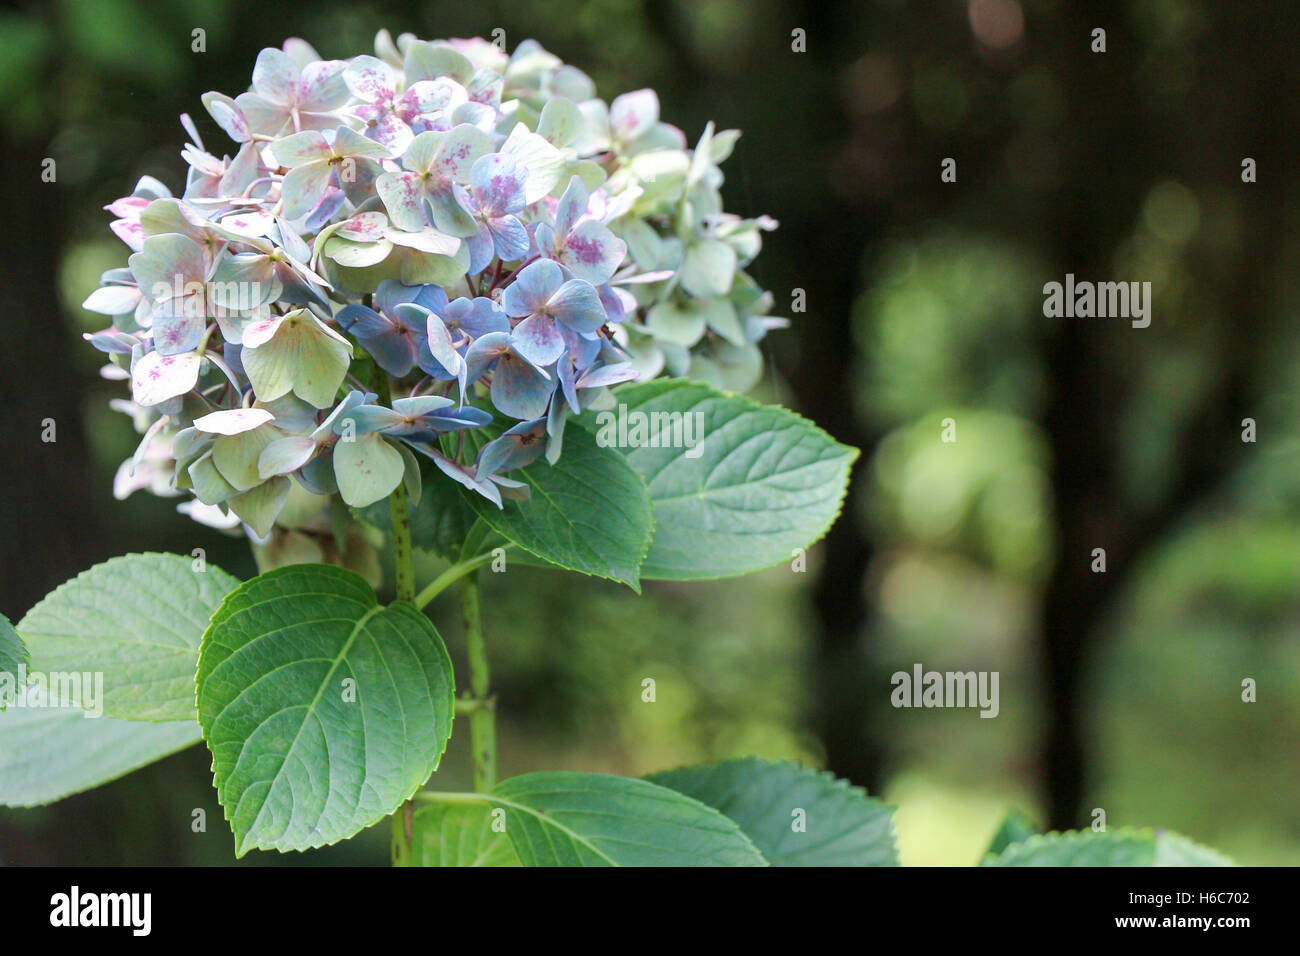 Beautiful fresh hydrangea flowers in nature background Stock Photo